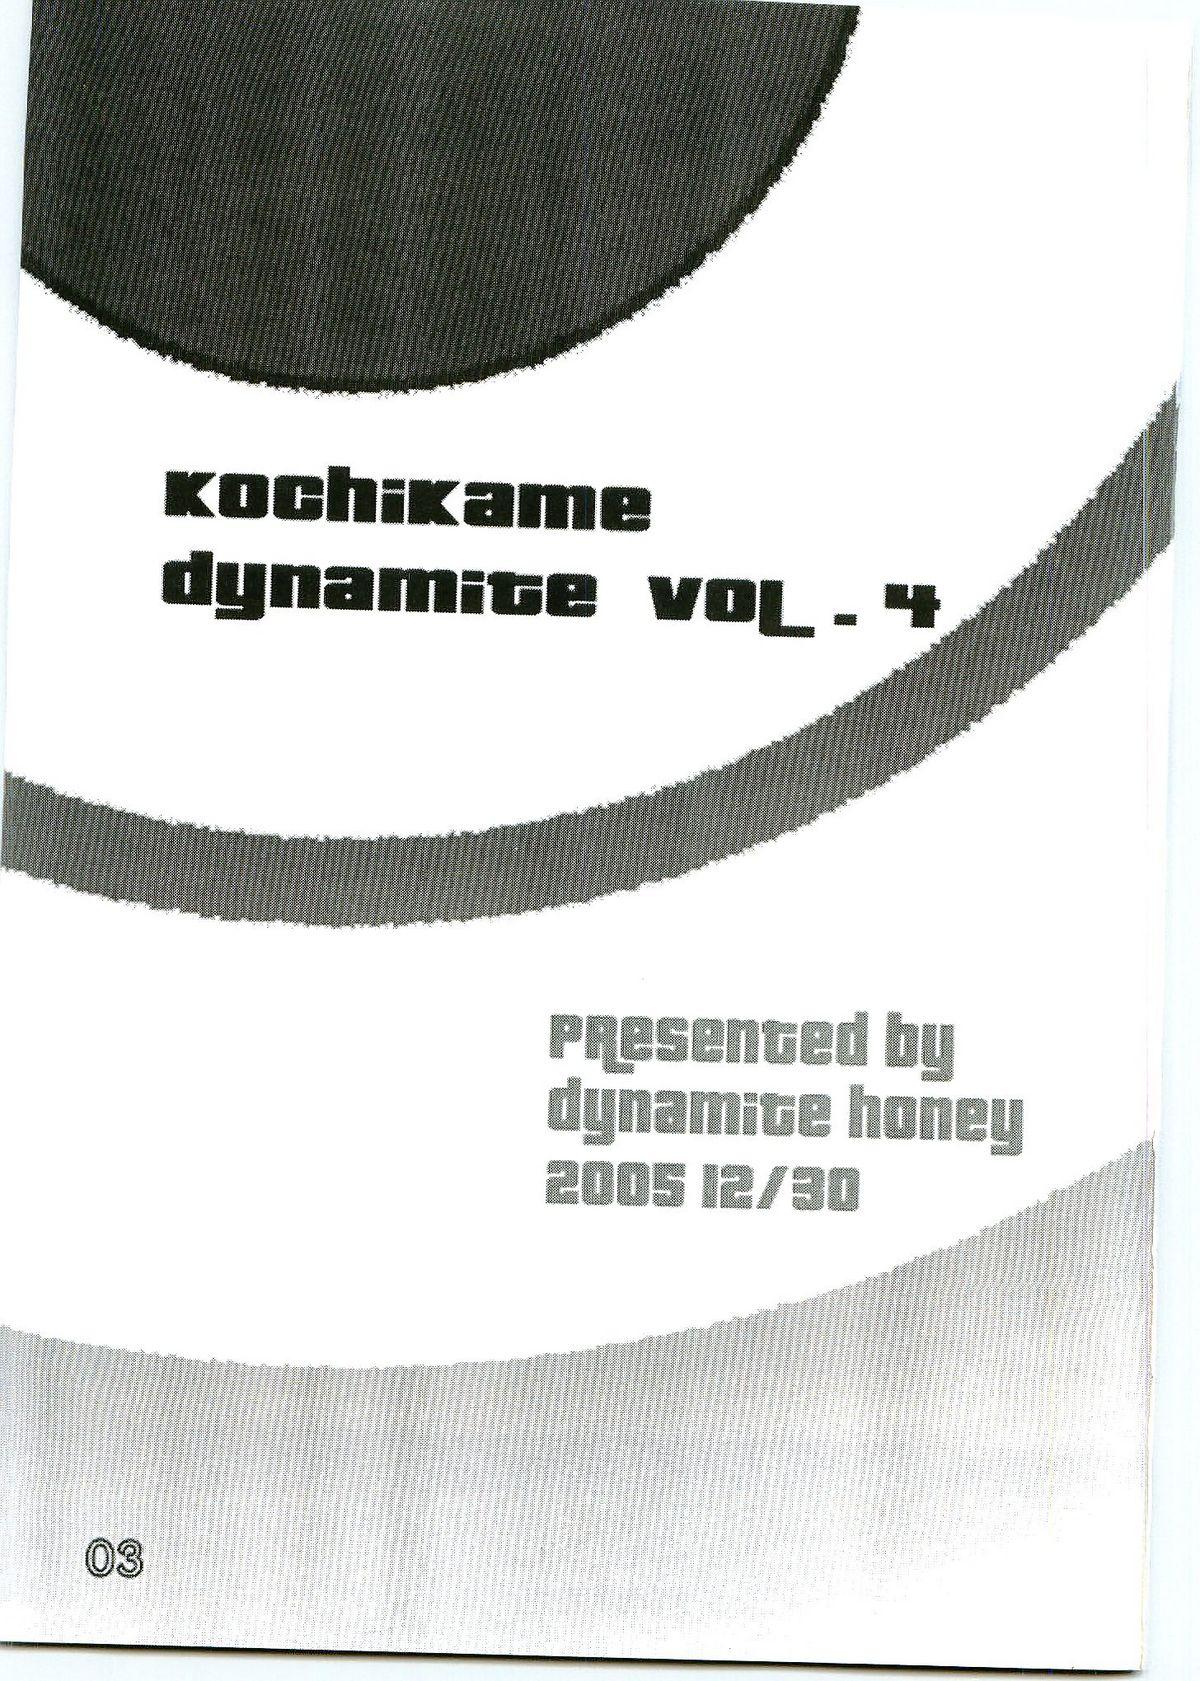 Sister Kochikame Dynamite Vol. 4 - Kochikame Gay Military - Page 2